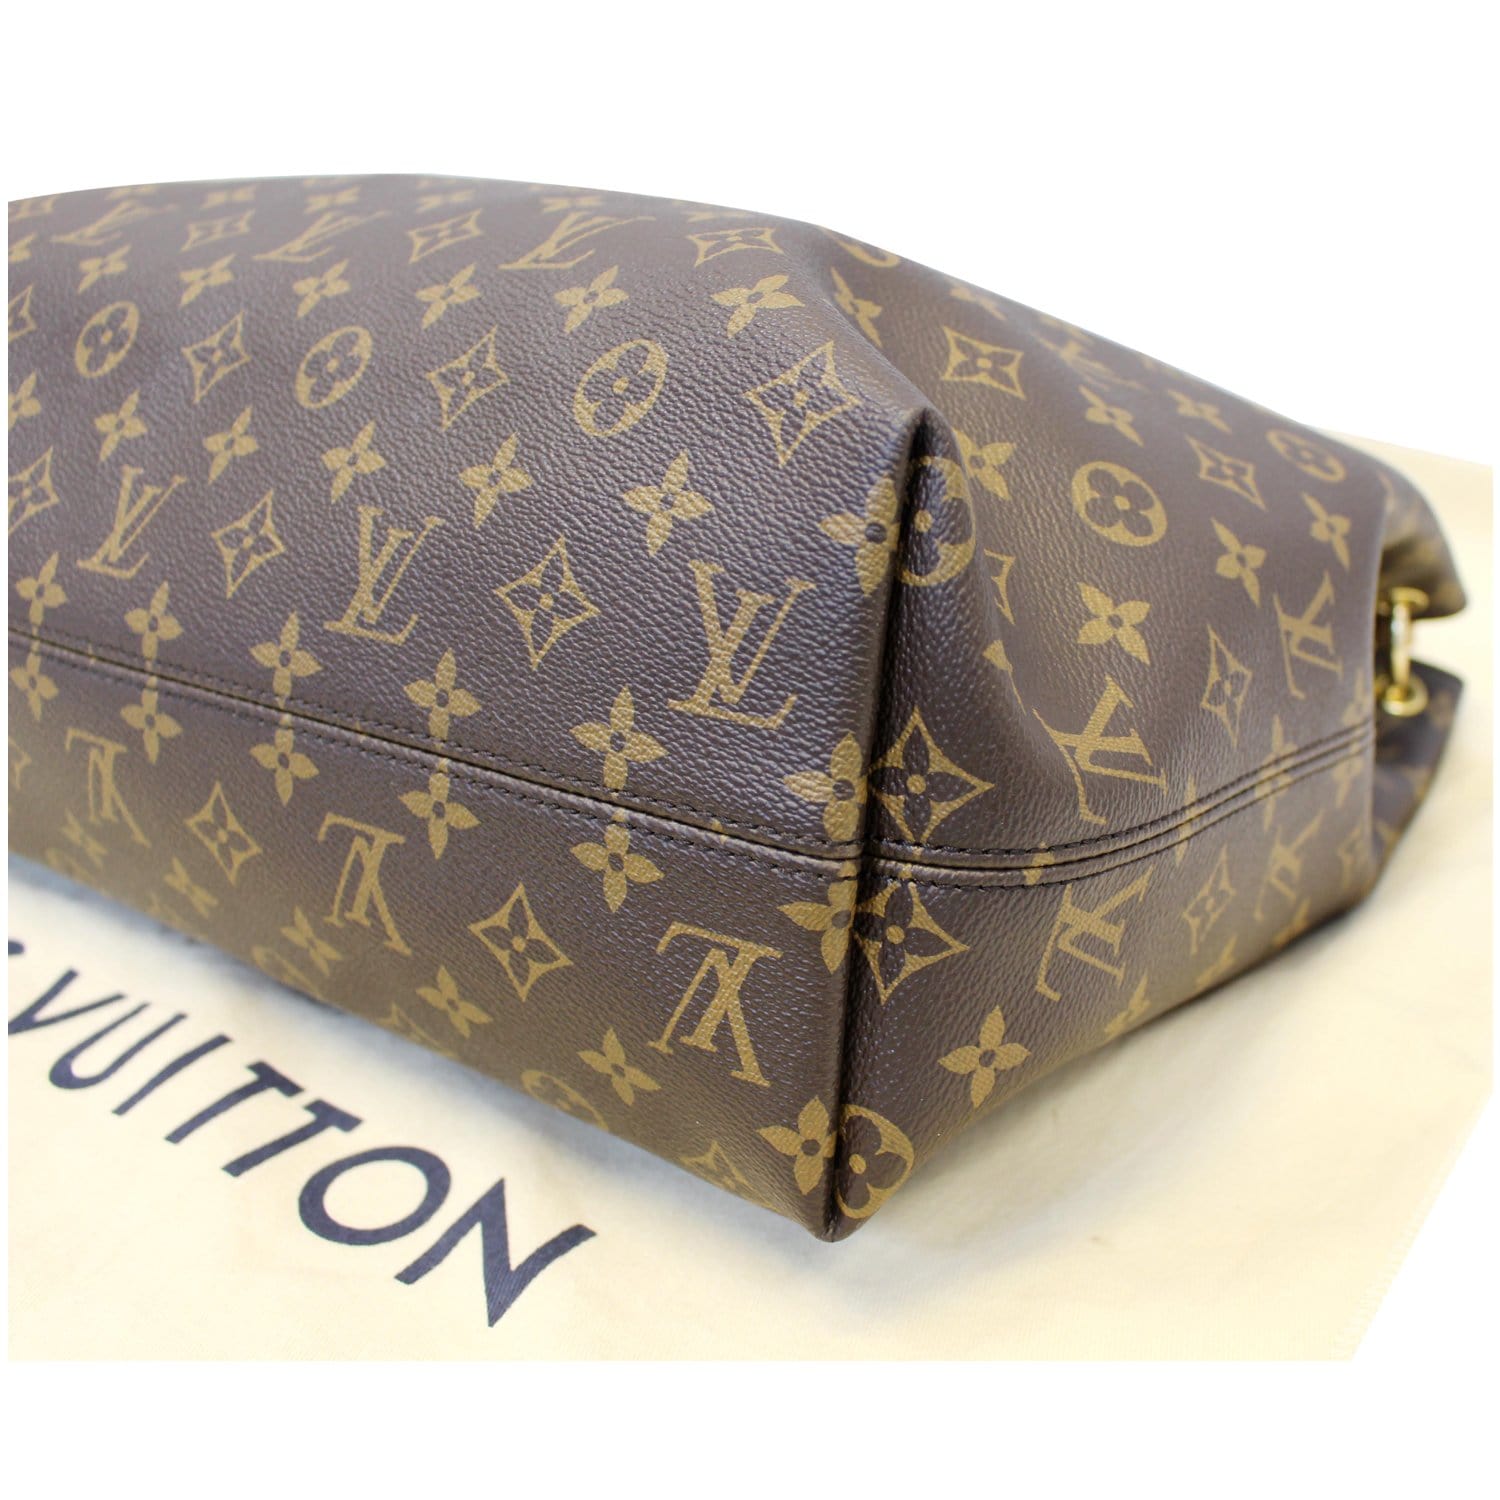 Louis Vuitton - Graceful MM Shoulder bag - Catawiki